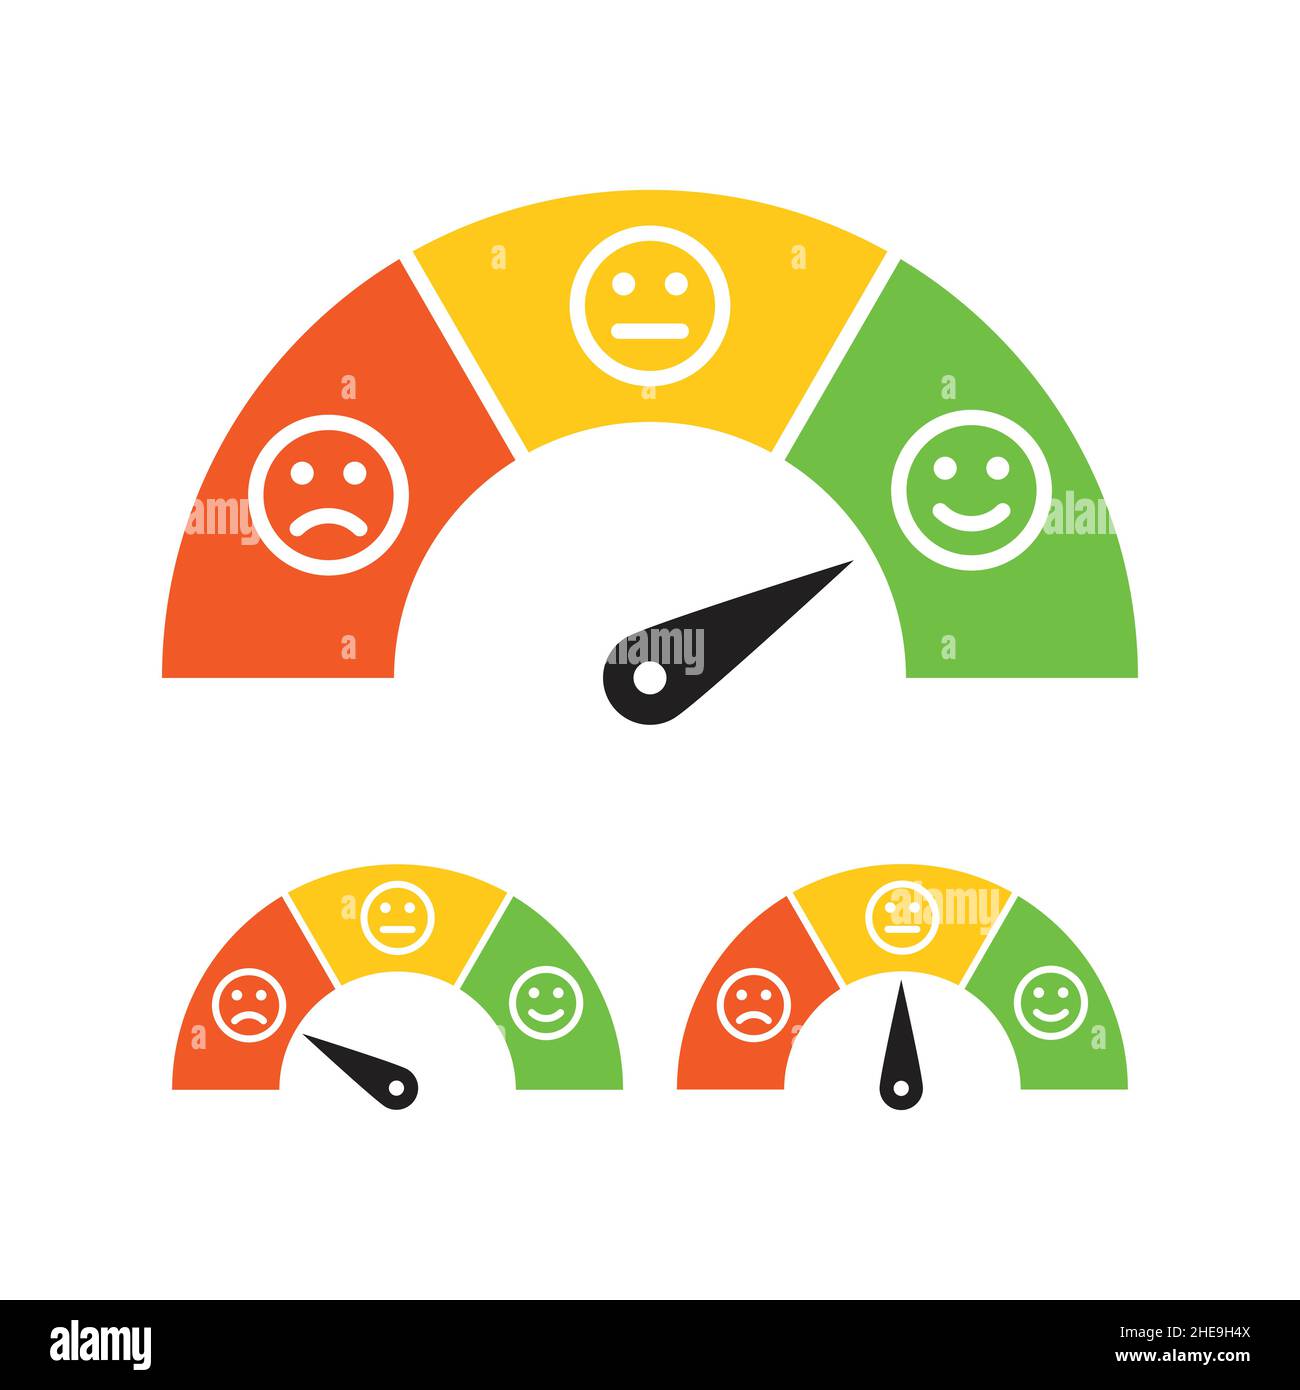 3,260 Client Satisfaction Logo Images, Stock Photos & Vectors | Shutterstock